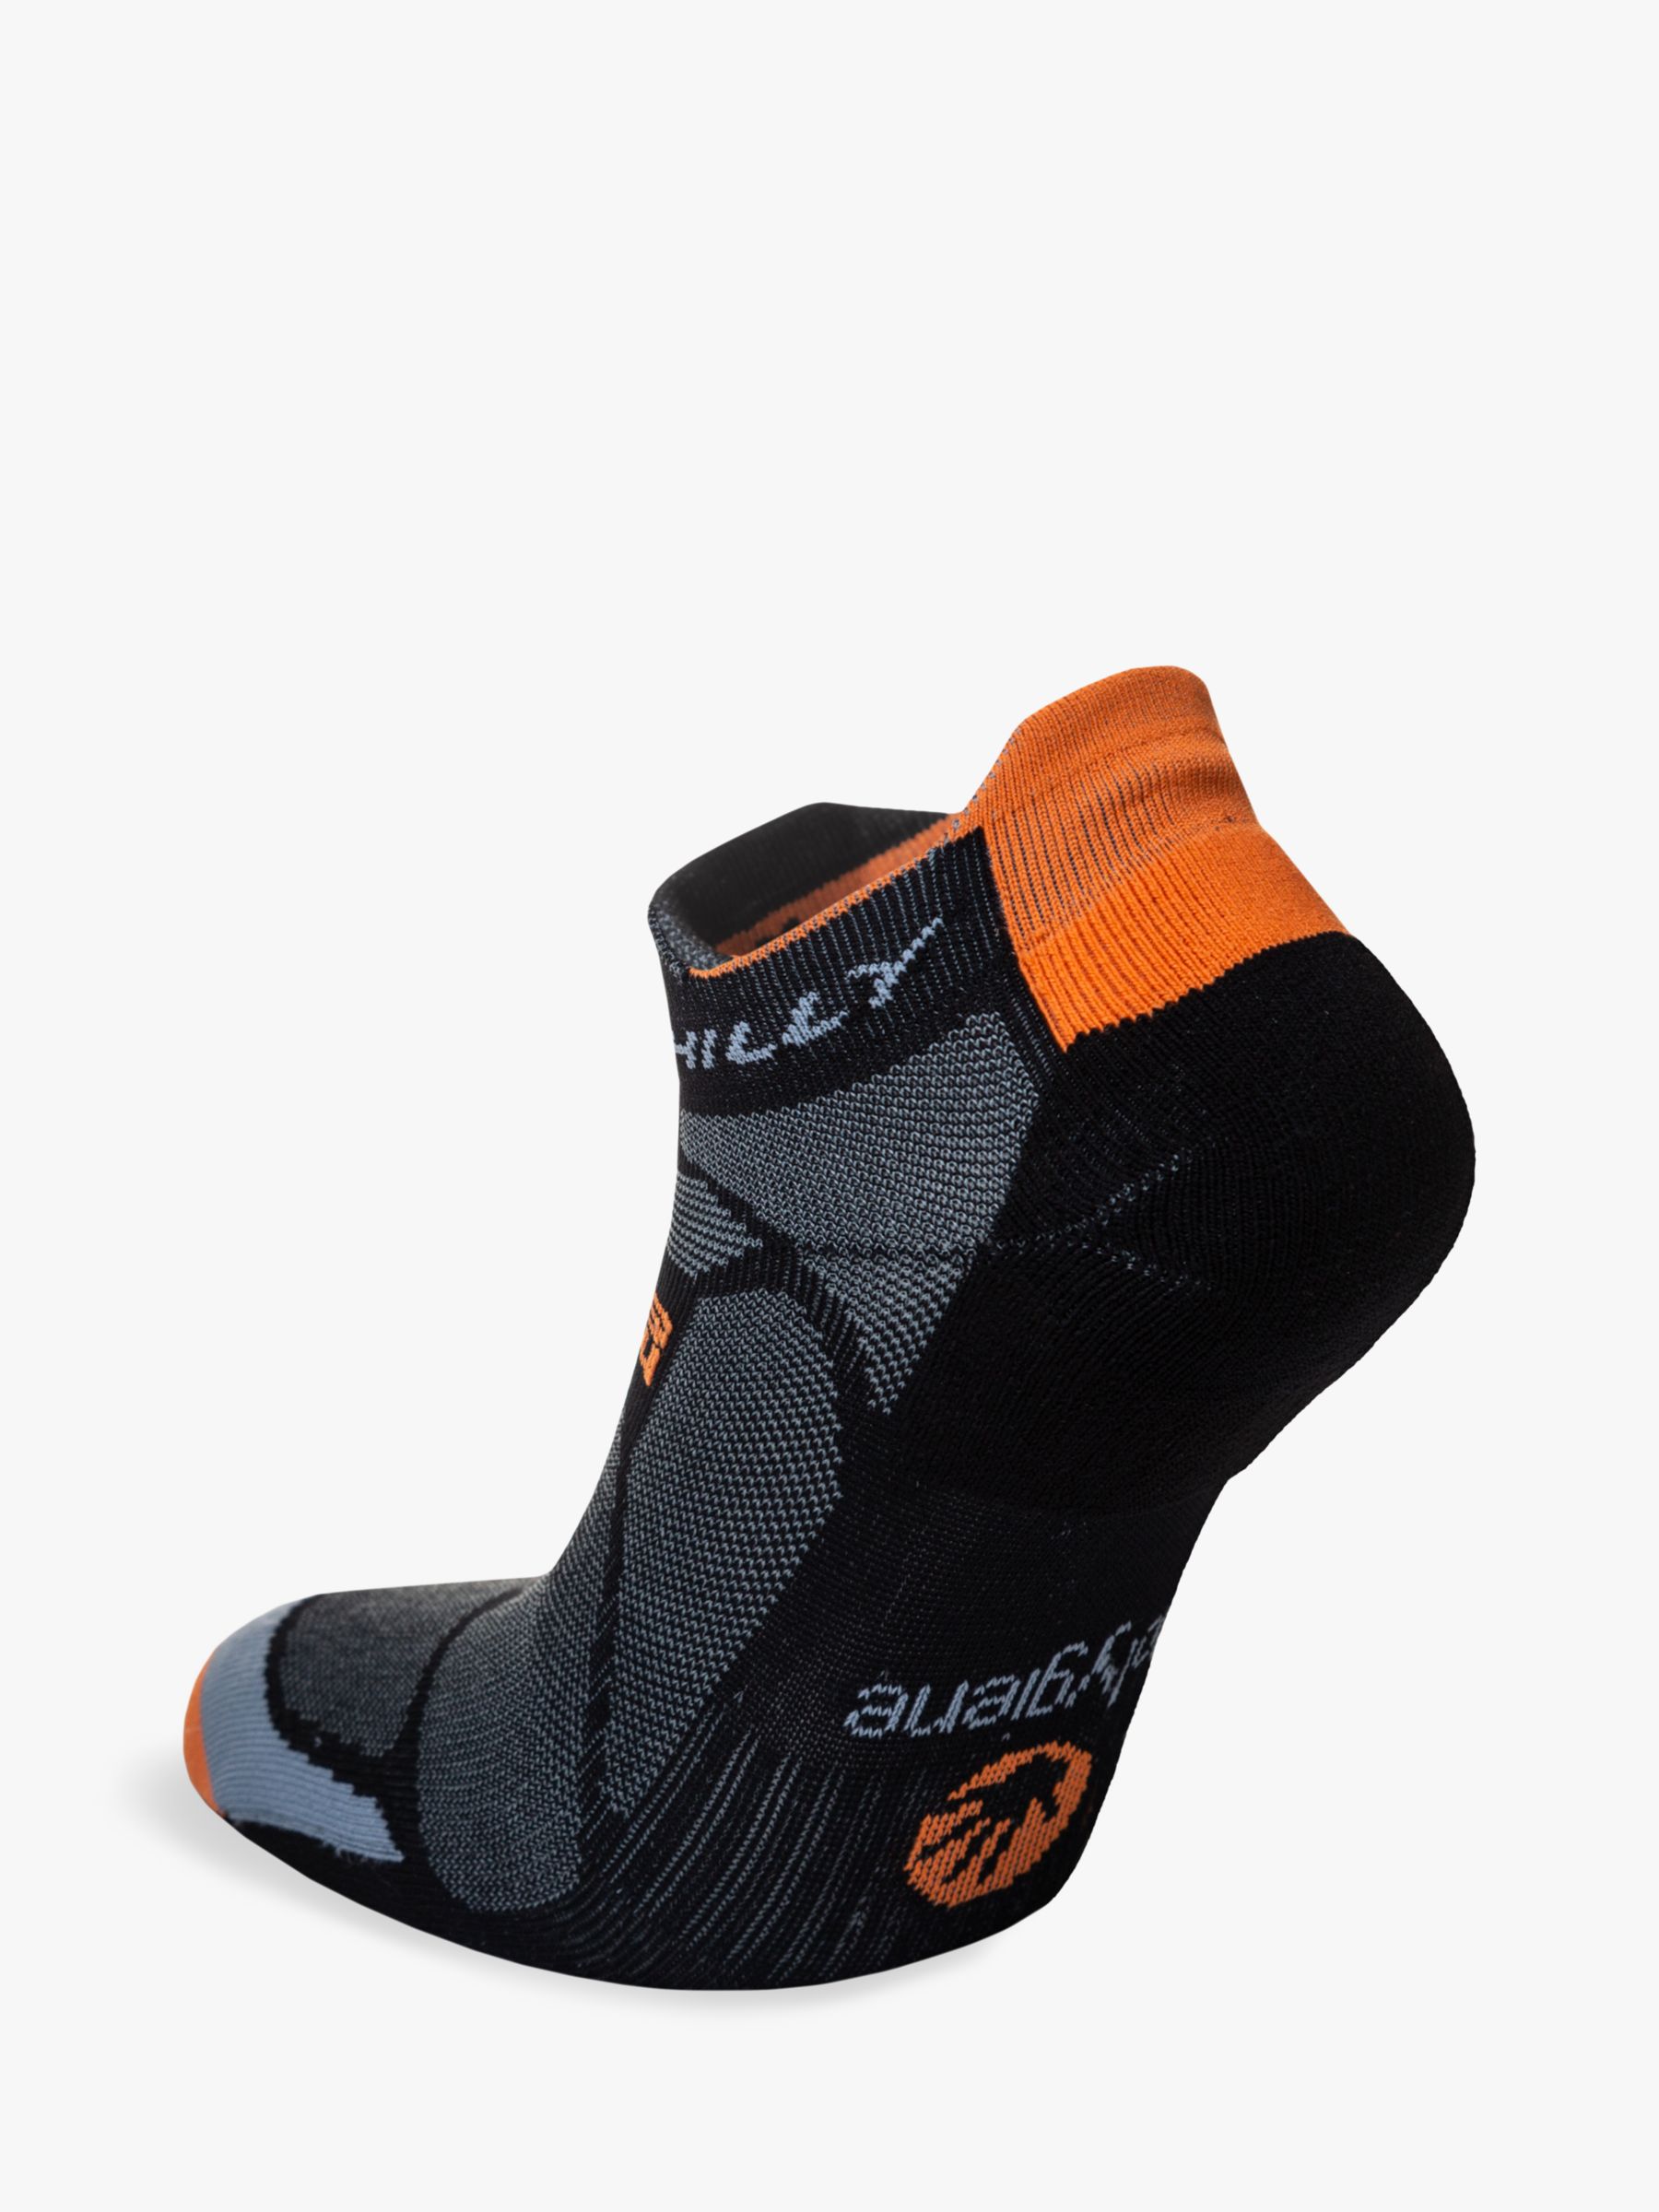 Hilly Marathon Fresh Running Socks, Black/Grey, S